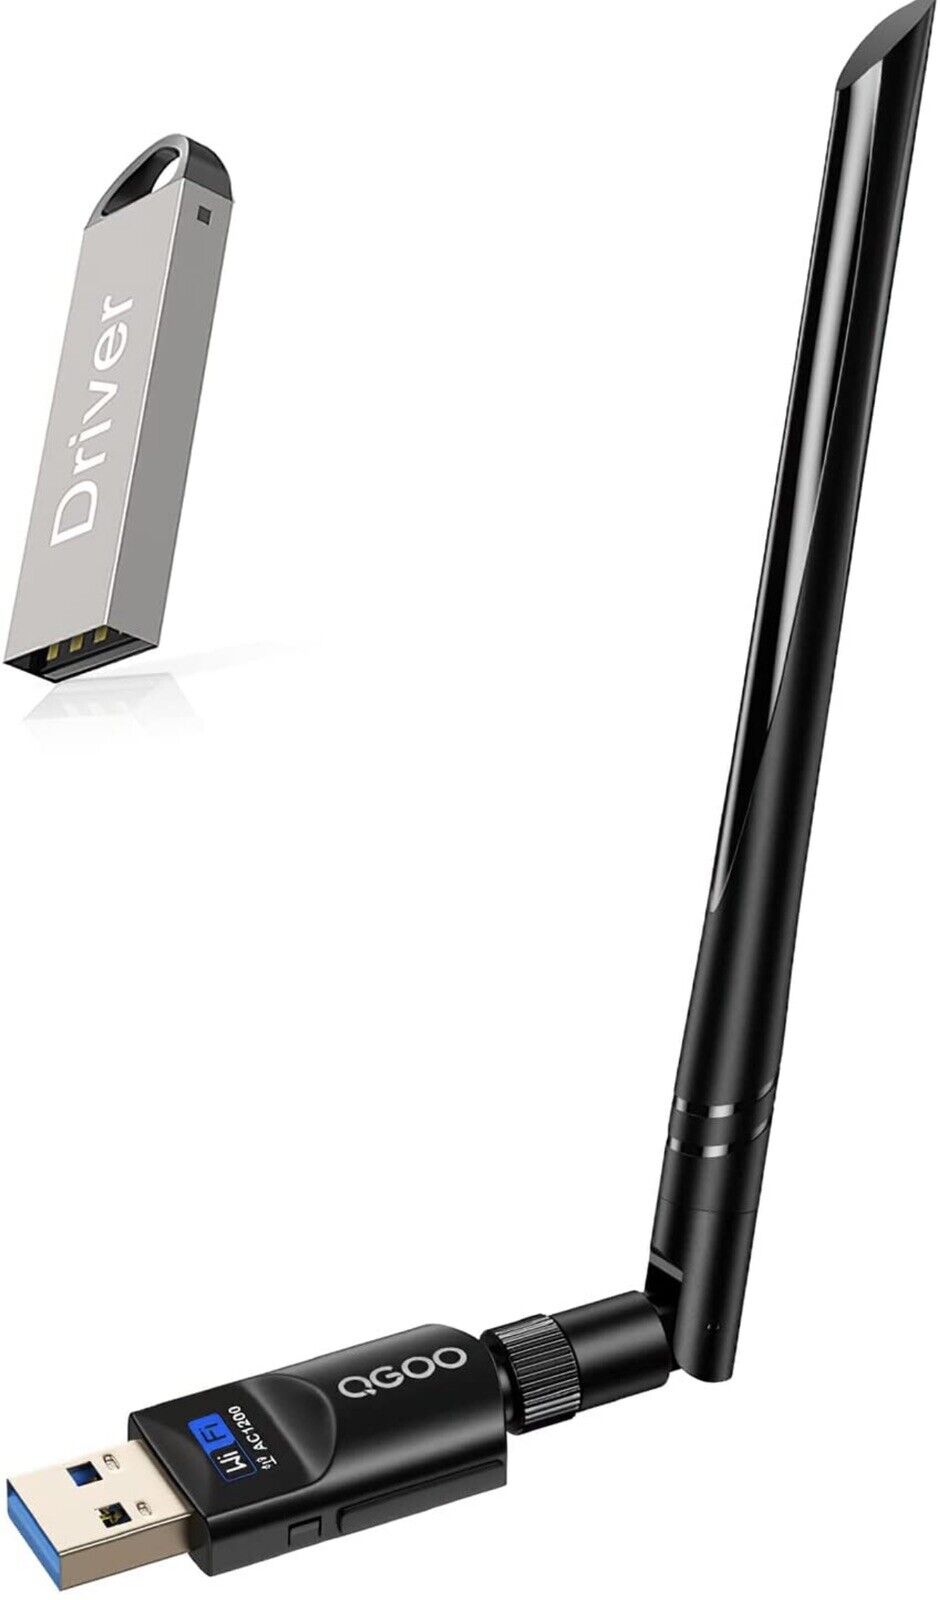 USB WiFi Adapter 1200Mbps QGOO USB 3.0 WiFi Dongle 802.11 ac Wireless Network...